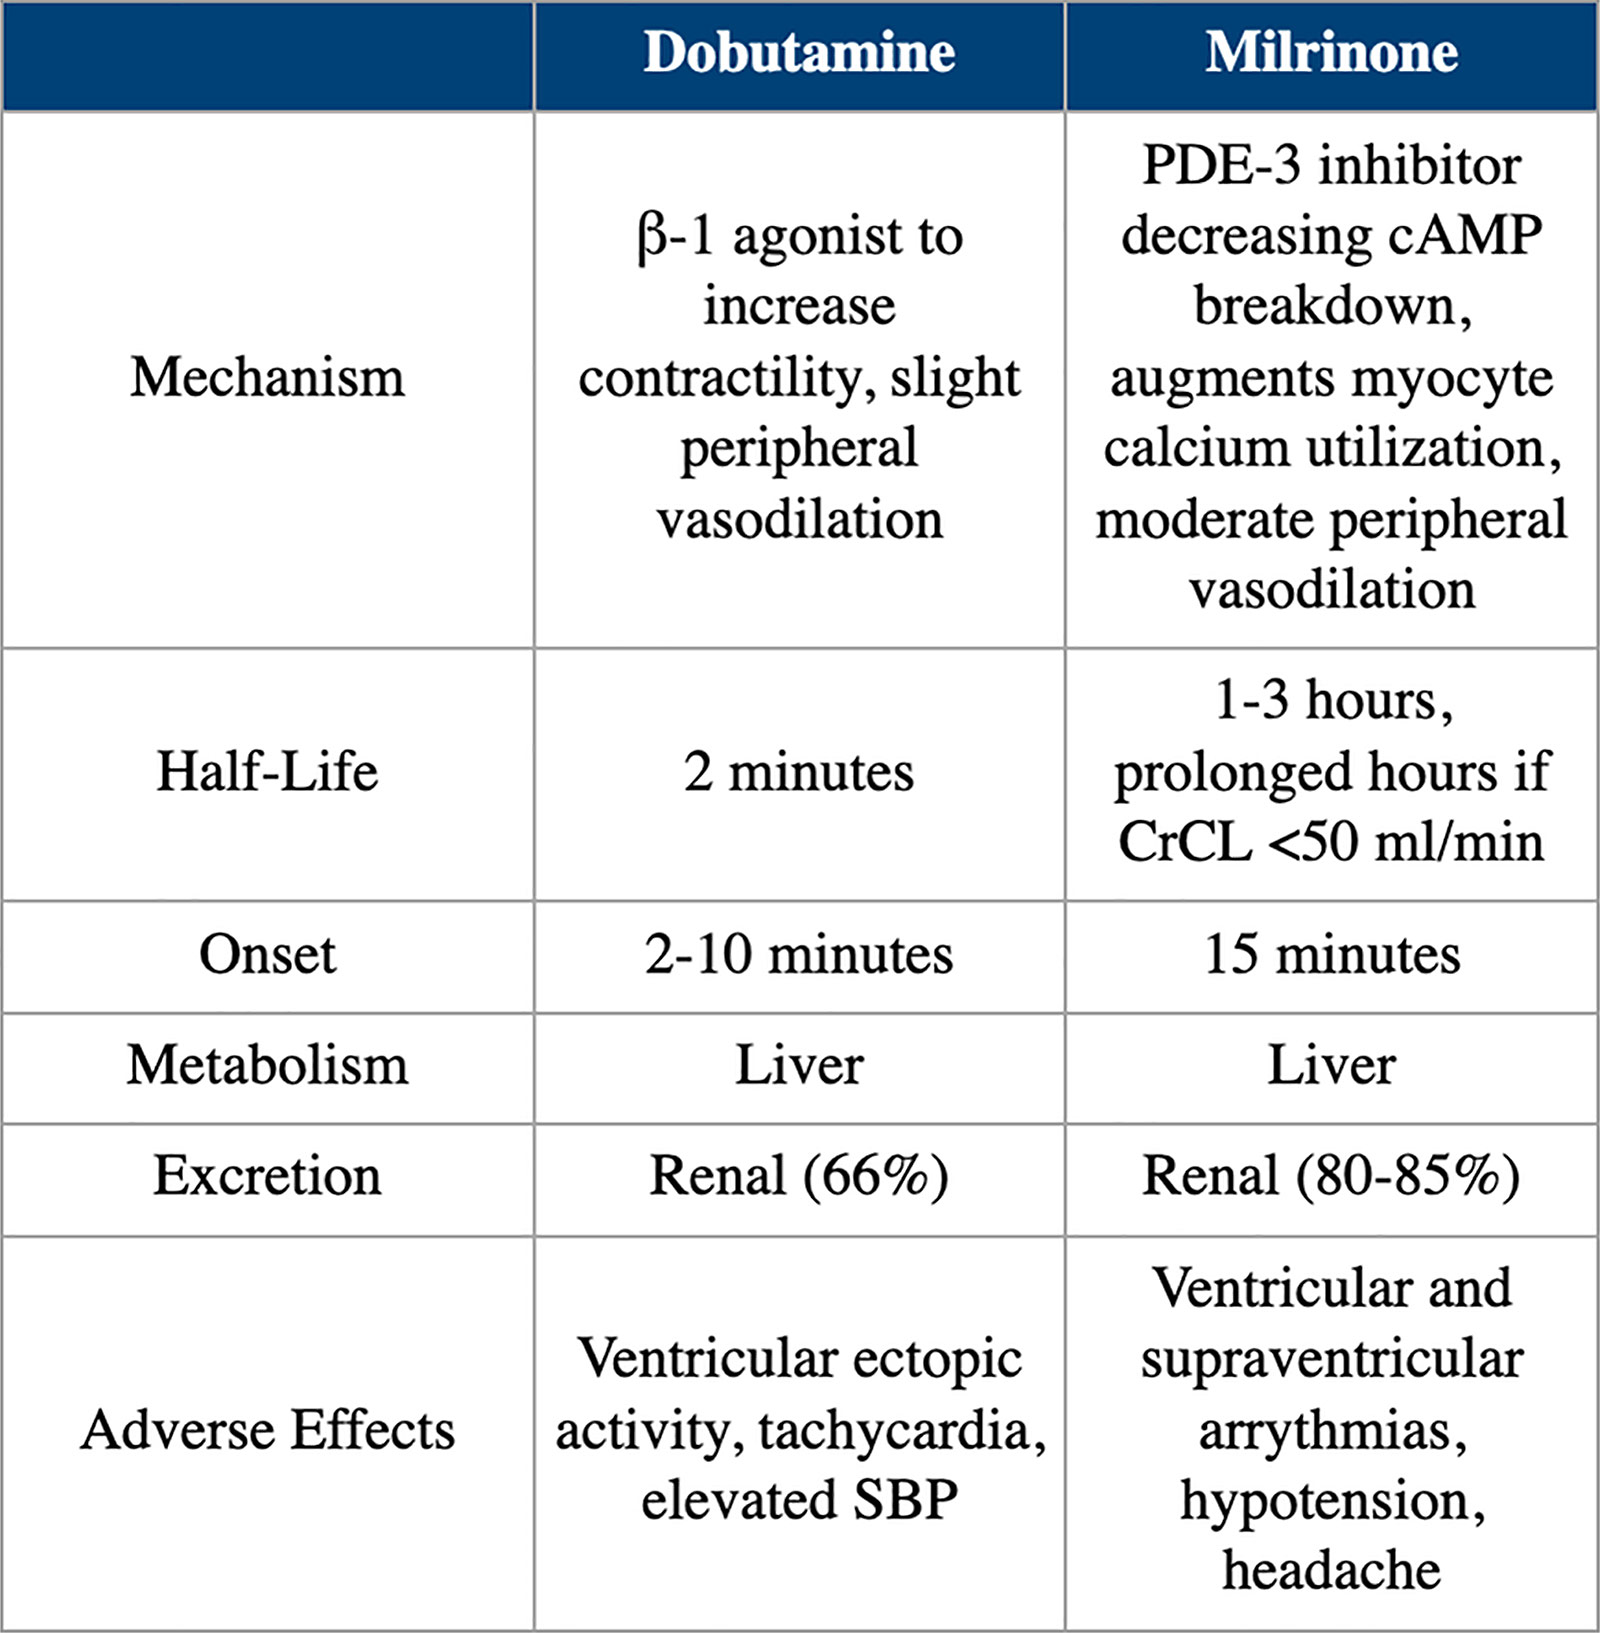 Table 2. Pharmacology and Pharmacokinetics of Dobutamine and Milrinone